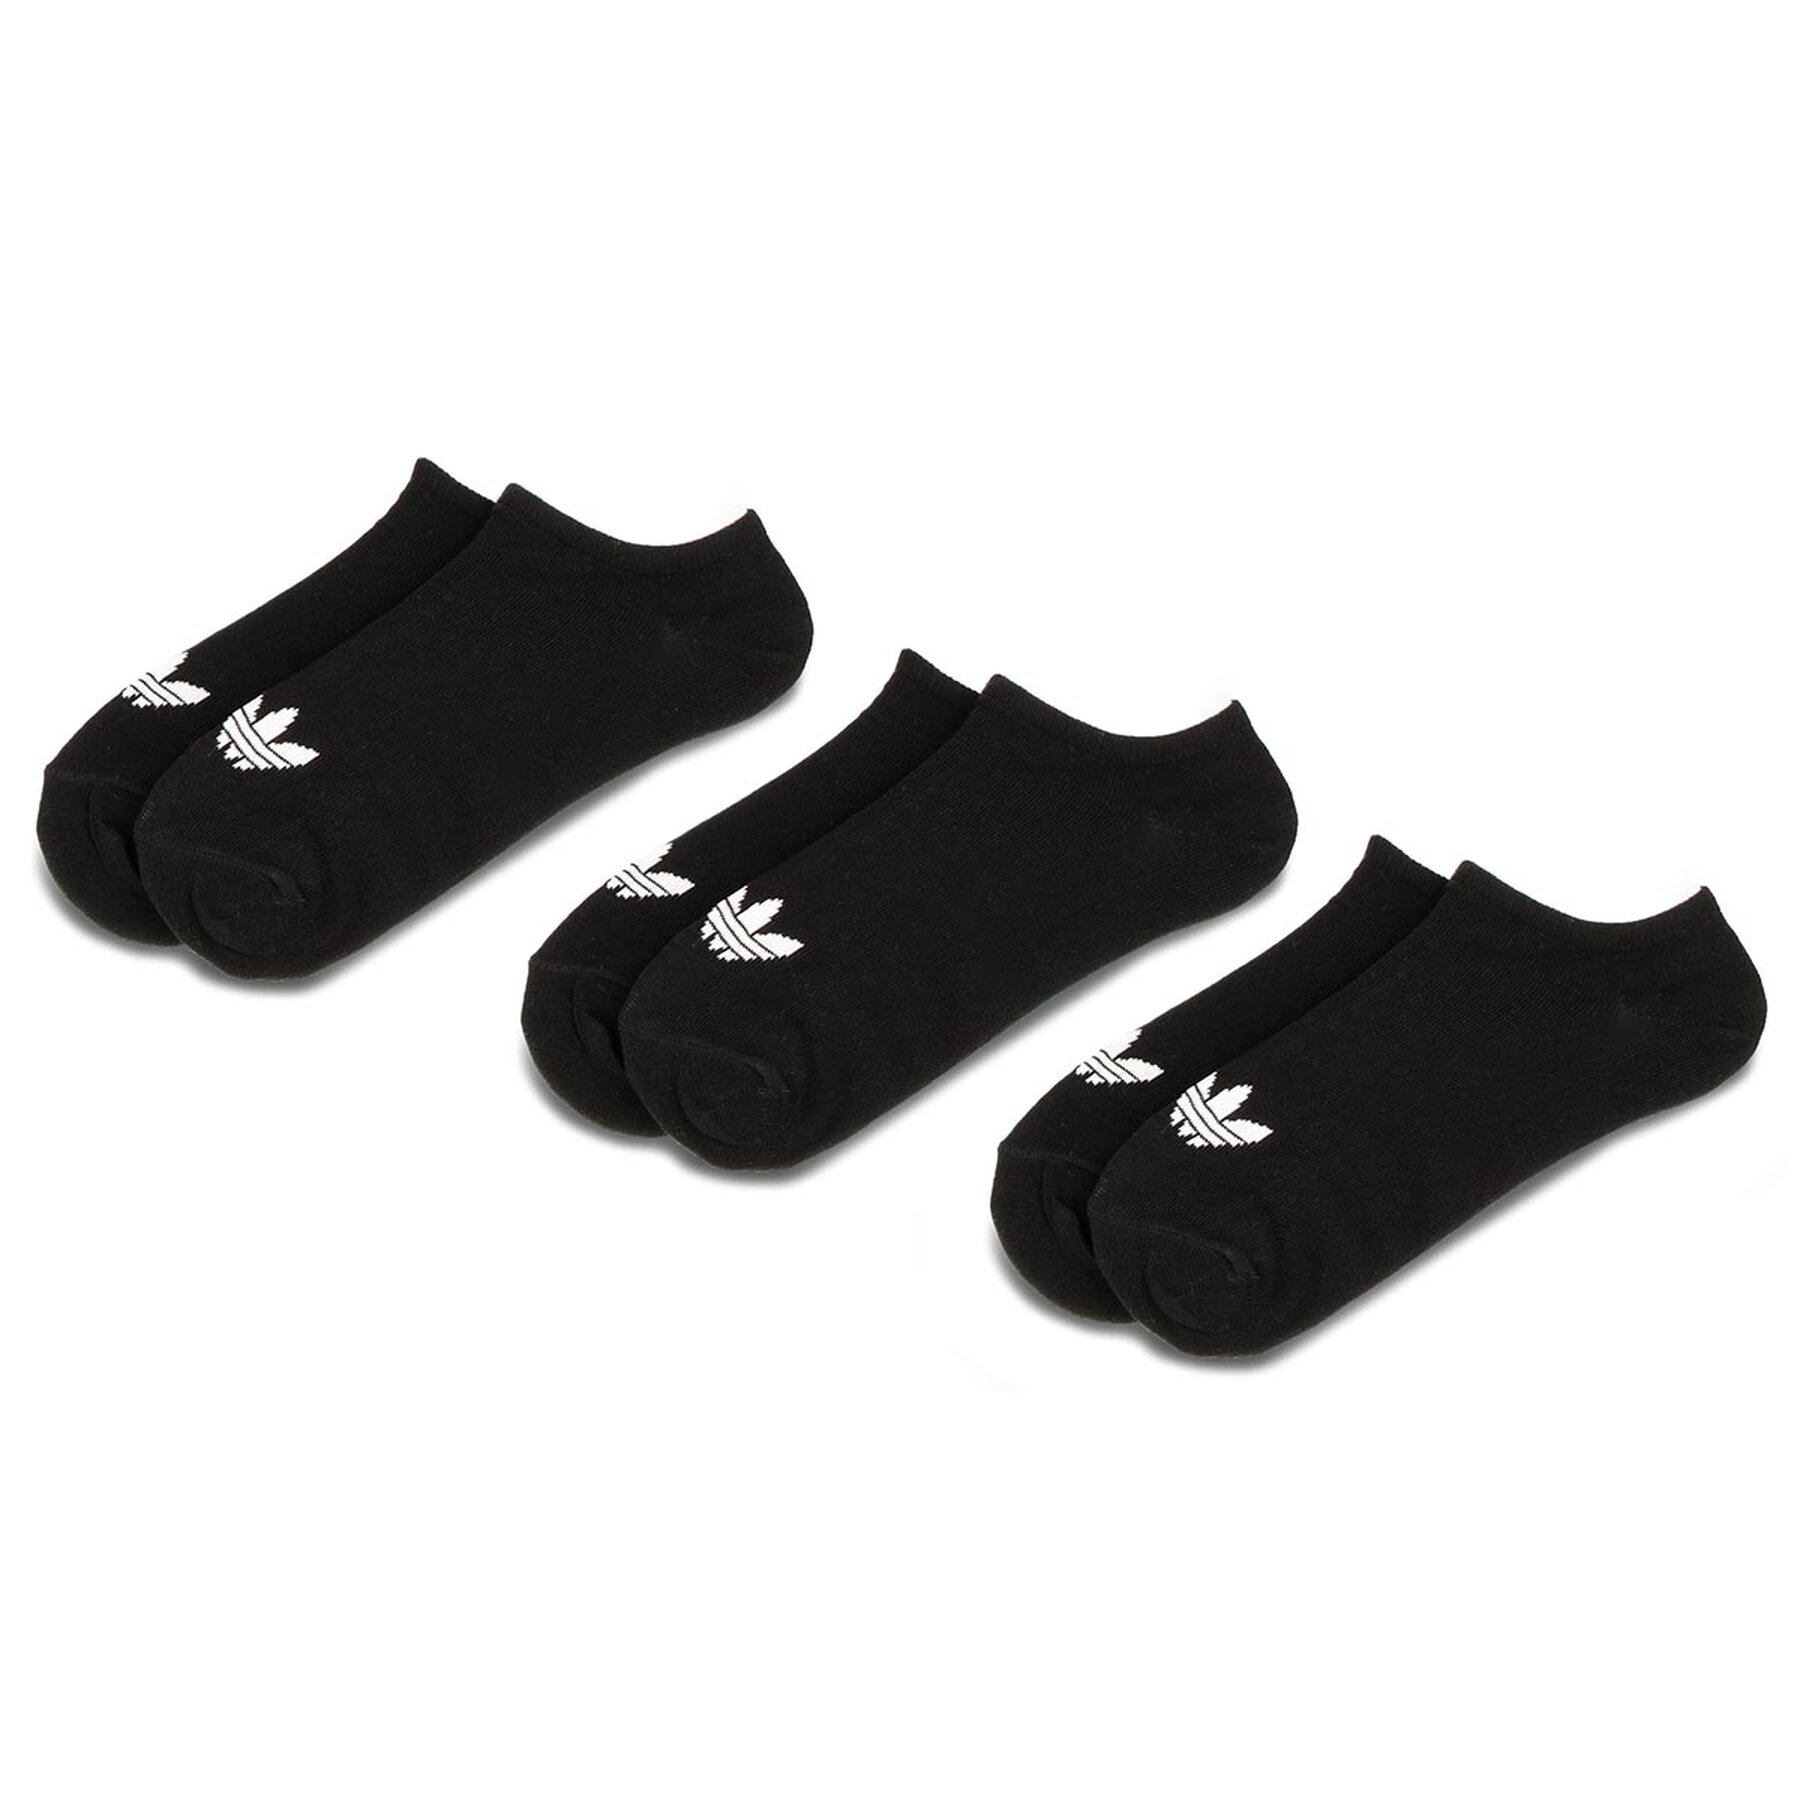 3er-Set niedrige Unisex-Socken adidas Trefoil Liner S20274 Black/Black/White von Adidas